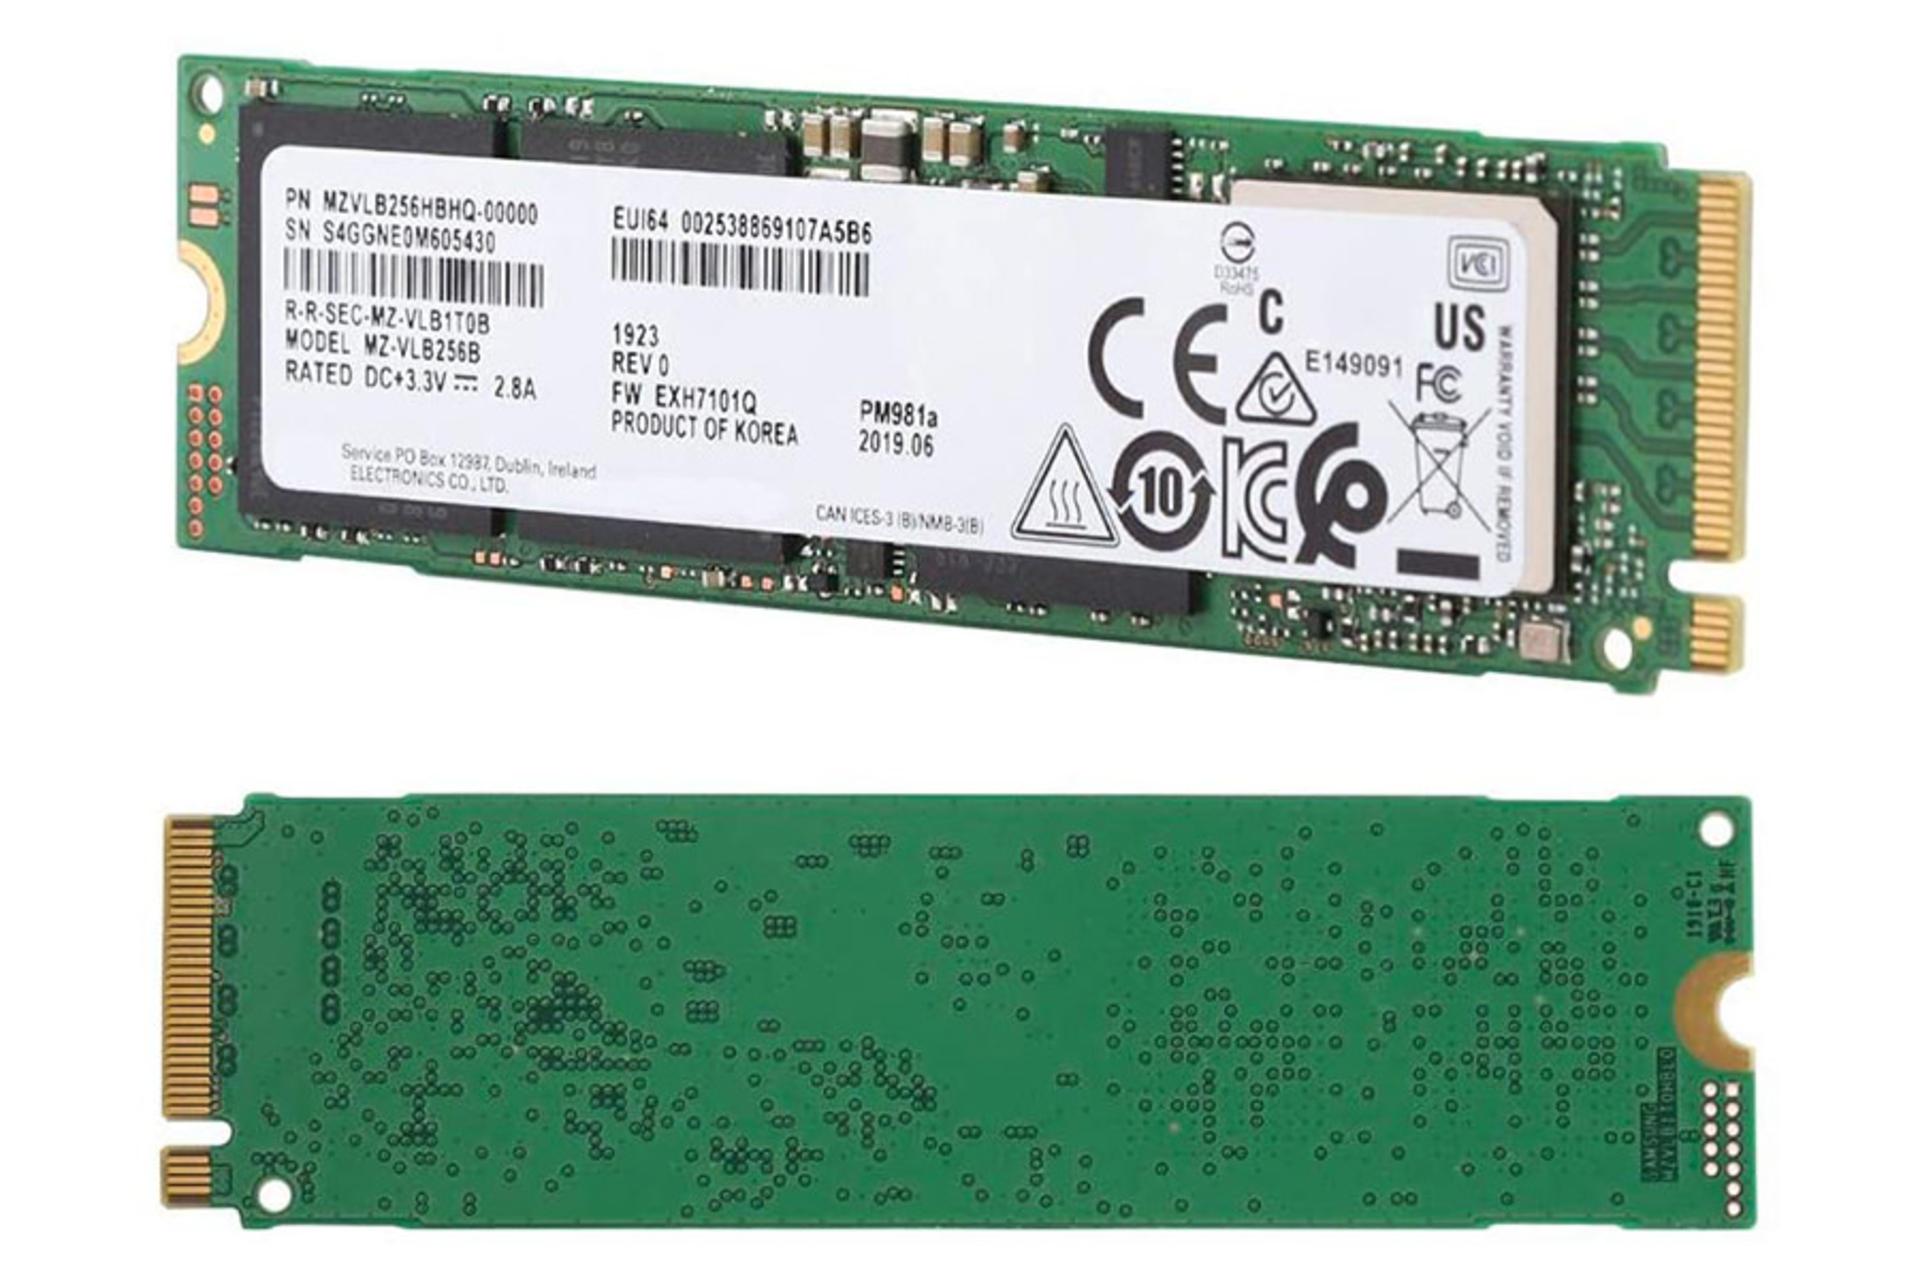 Samsung PM981a PCIe M.2 / سامسونگ PM981a PCIe M.2